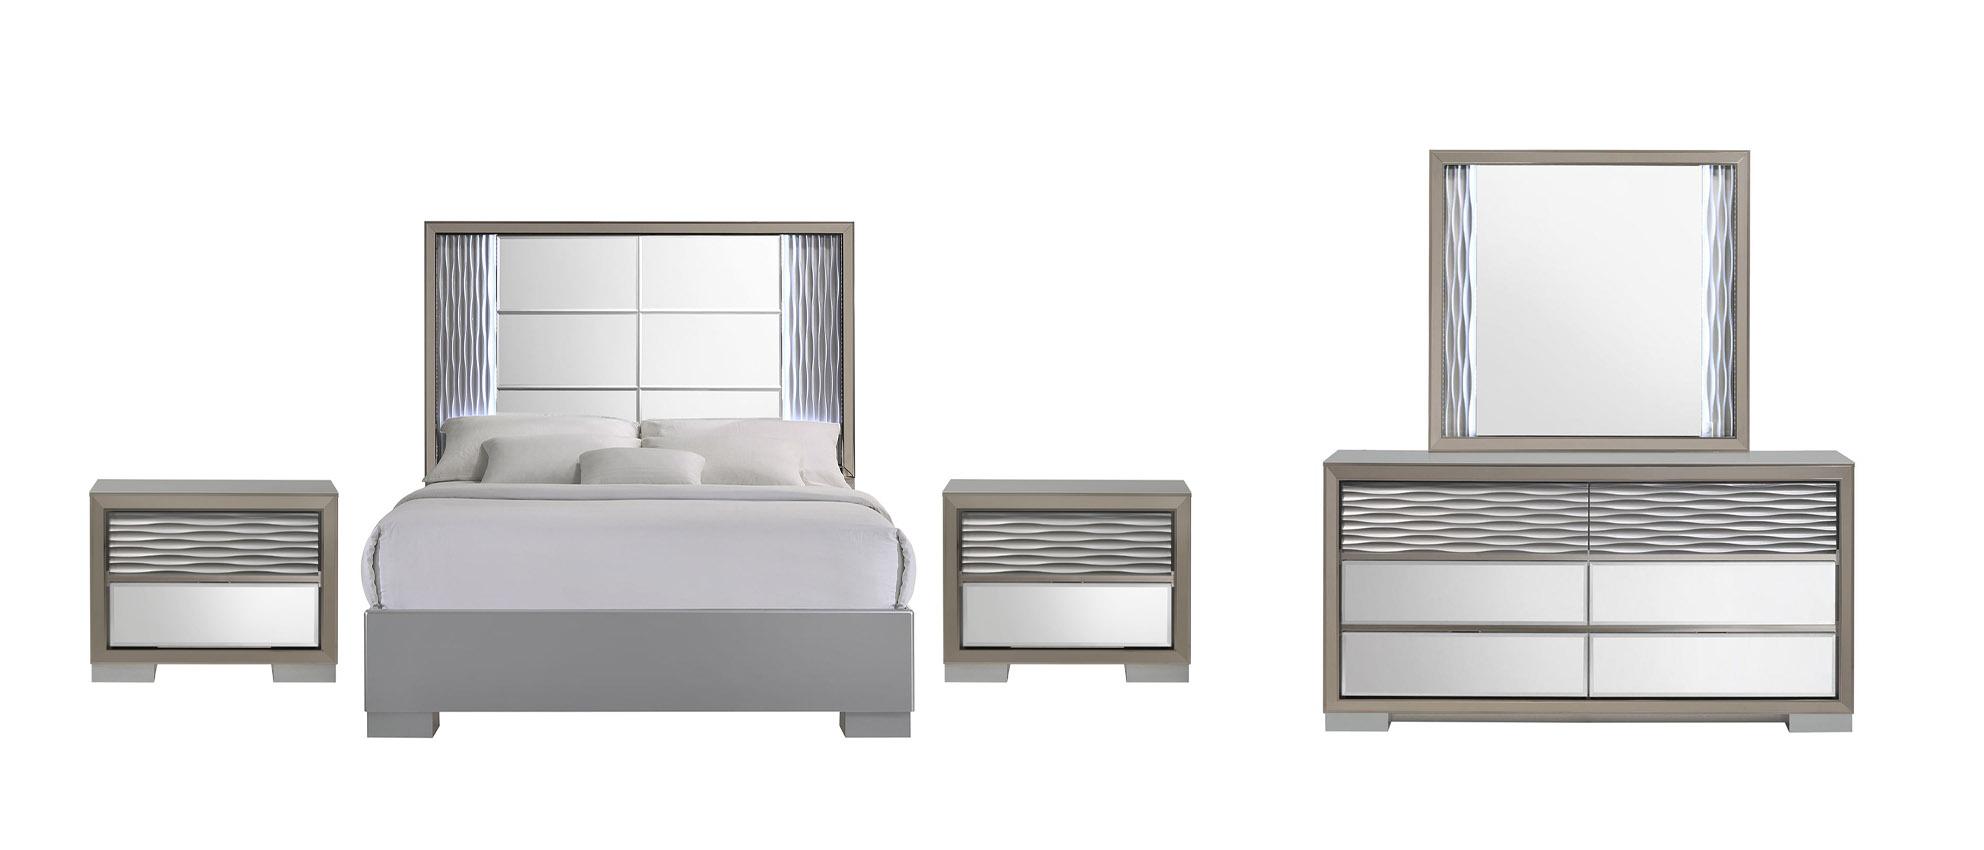 Contemporary Platform Bedroom Set SKYLINE SKYLINE-SILVER-KB-Set-5 in Mirrored, Silver 